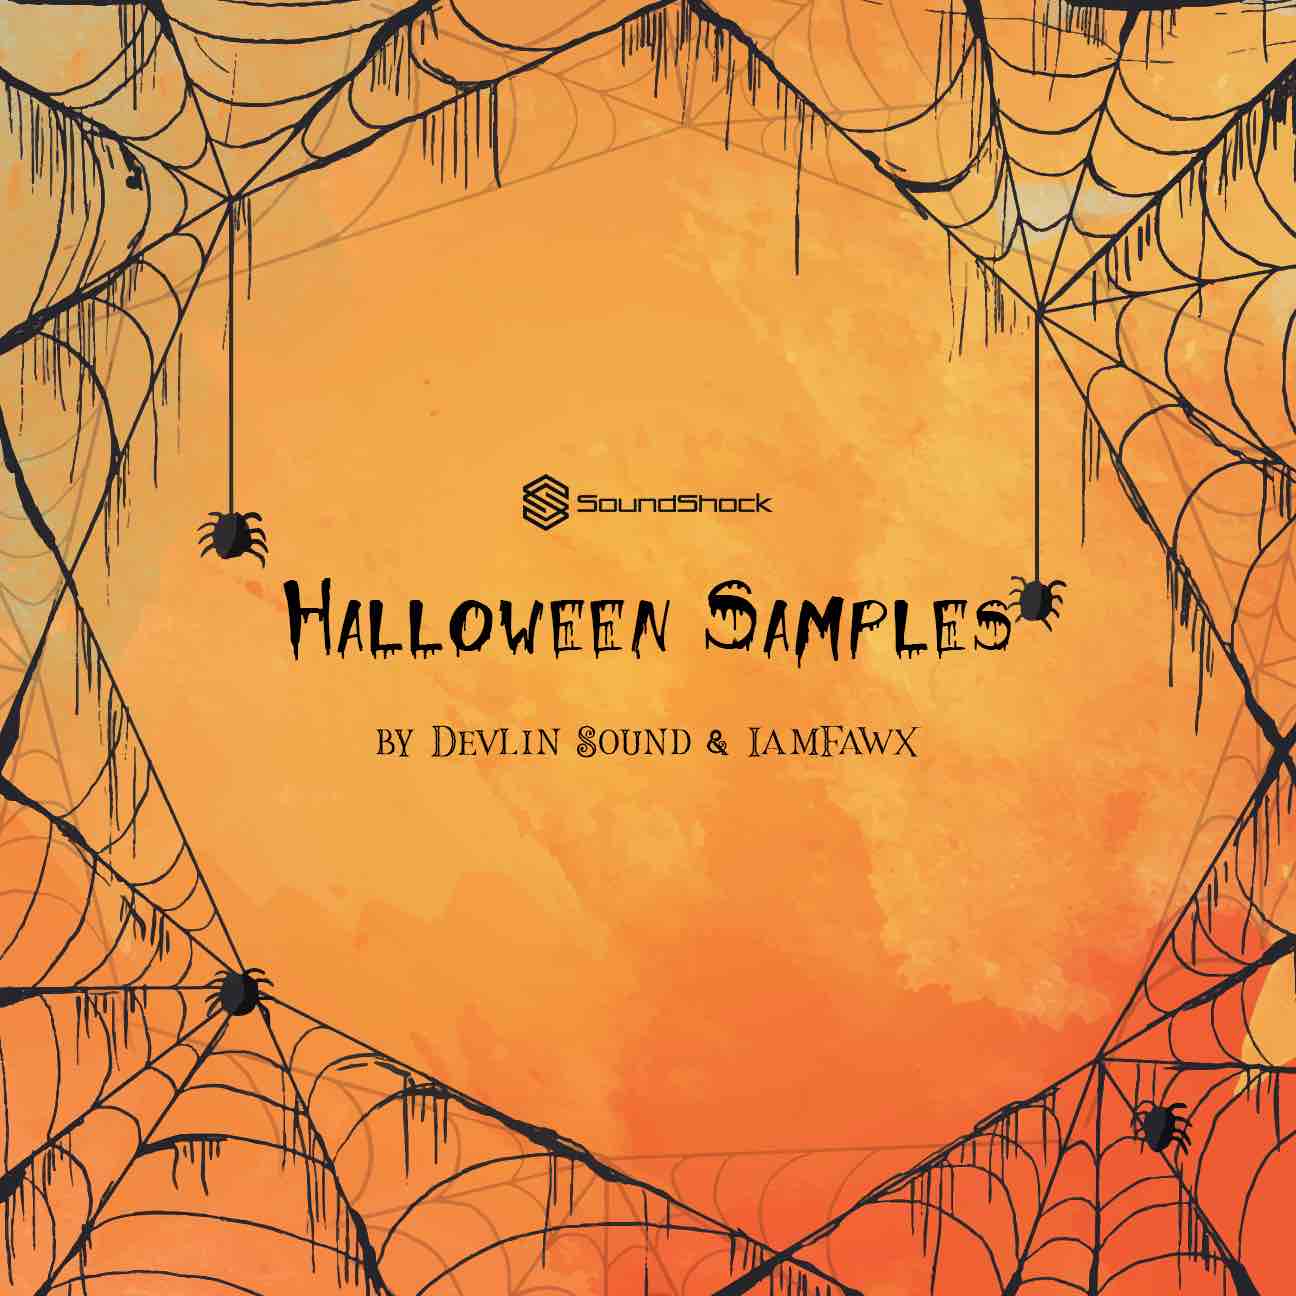 Halloween samples by daniel brook & lax.